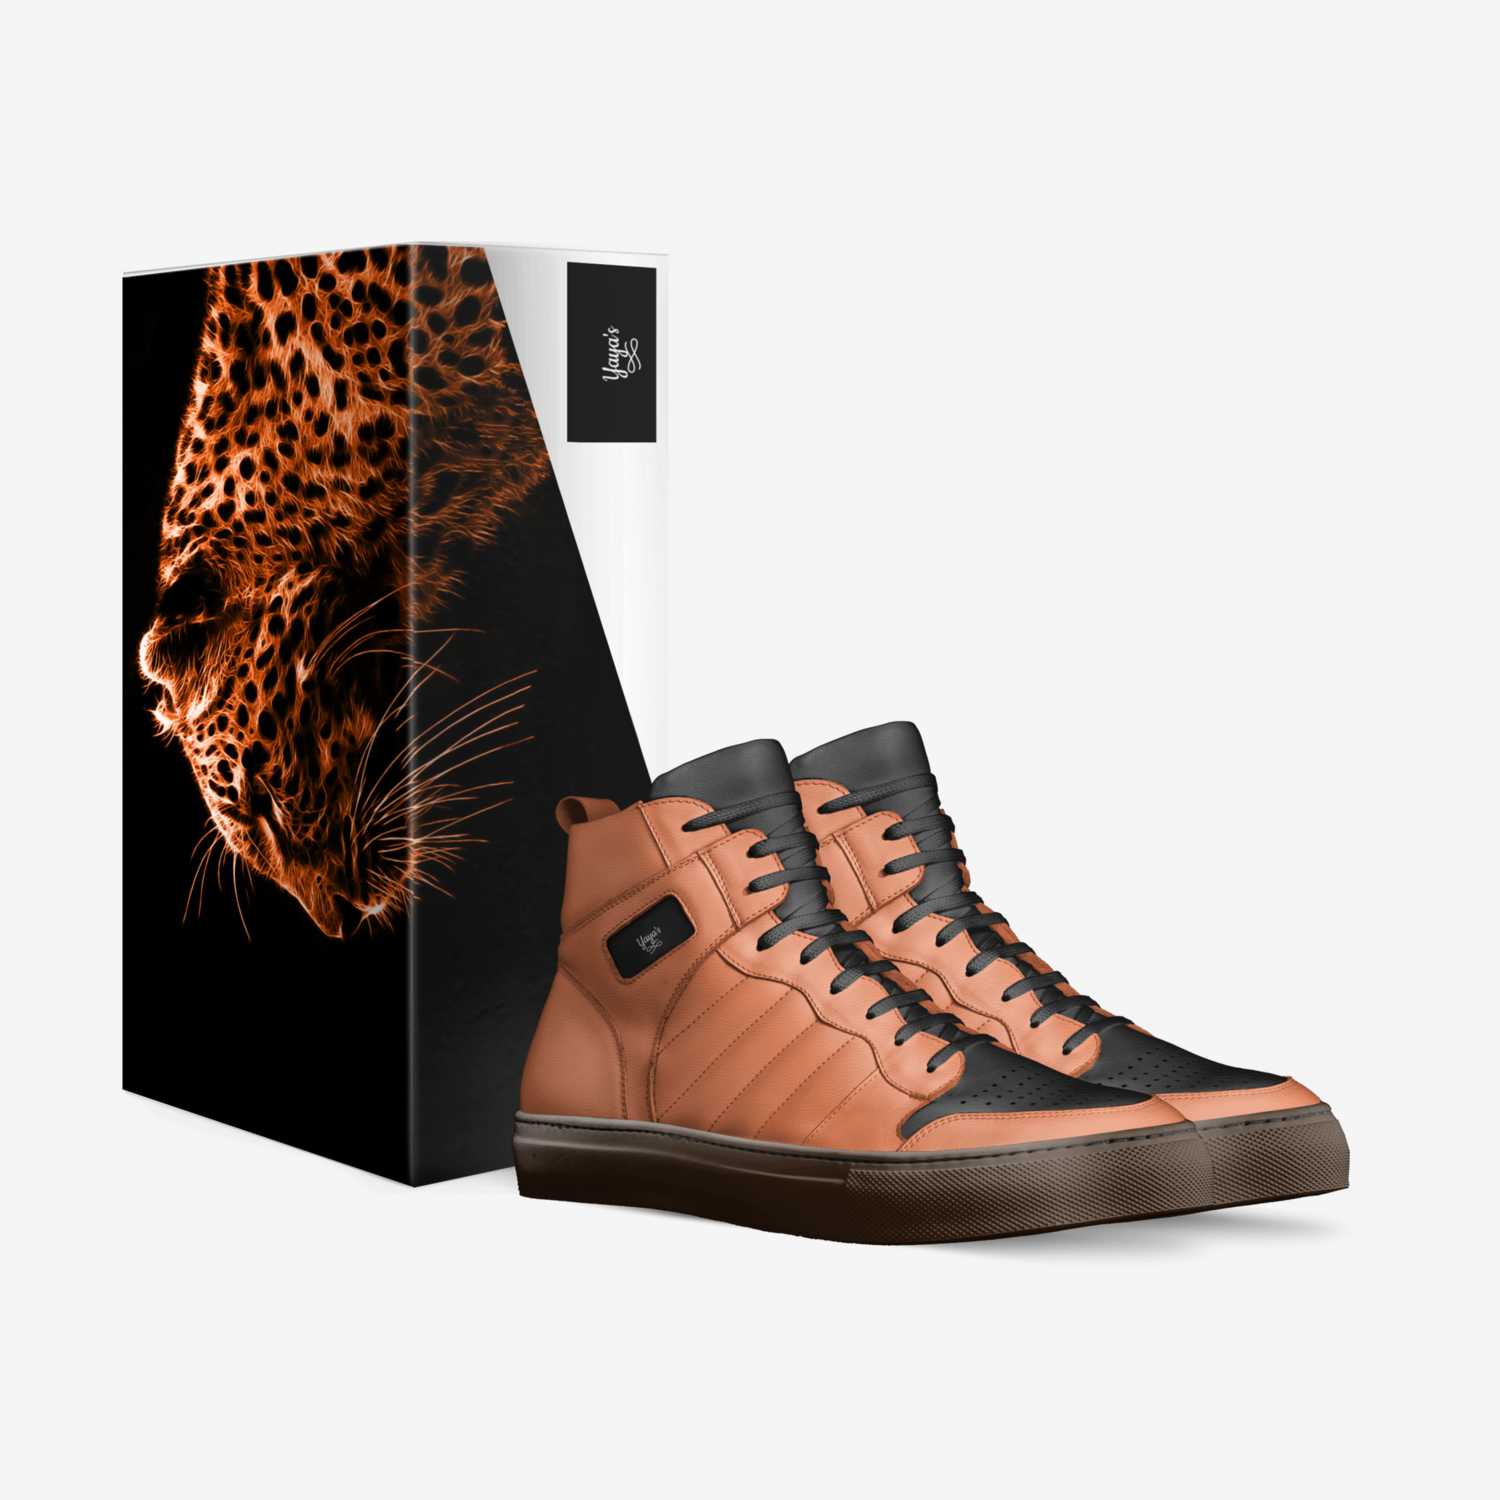 Yaya's custom made in Italy shoes by Amir Shaheed | Box view